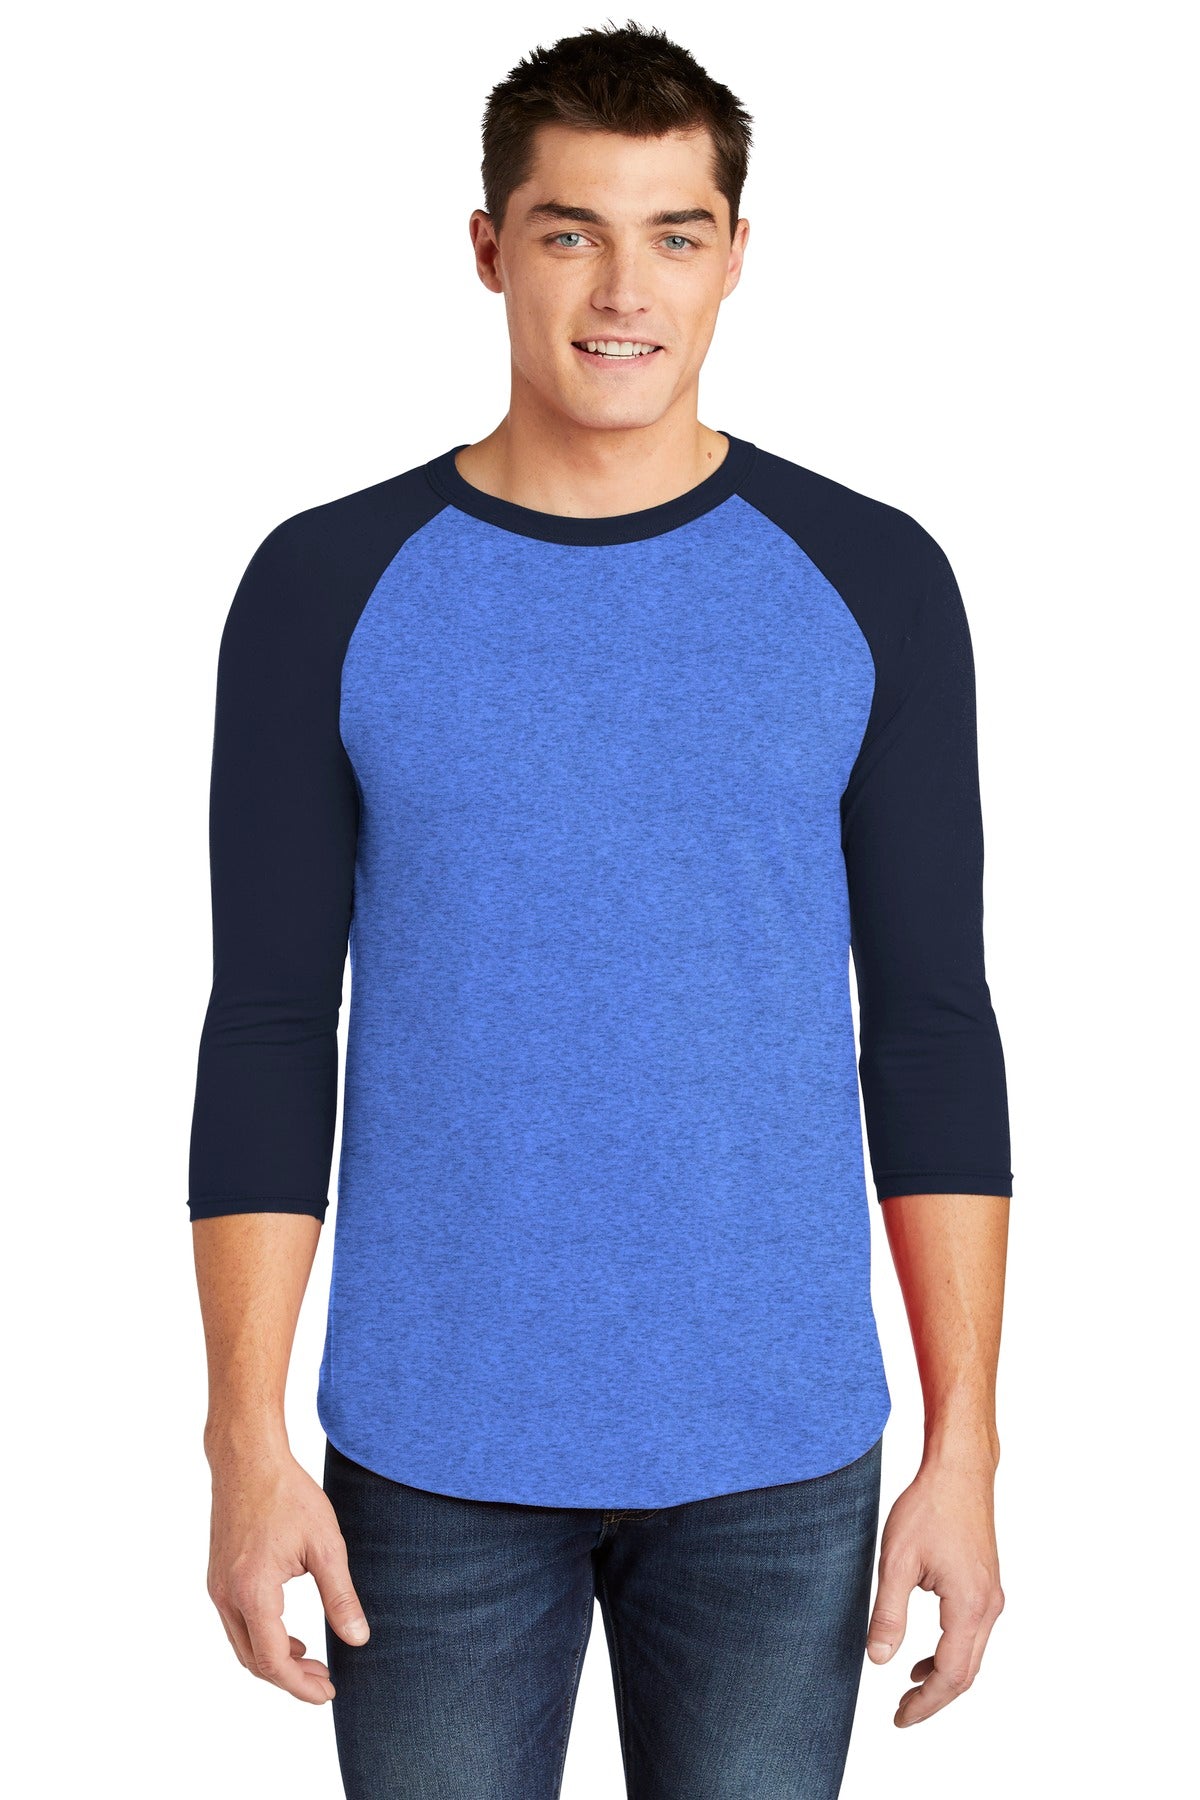 American Apparel ® Poly-Cotton 3/4-Sleeve Raglan T-Shirt. BB453W